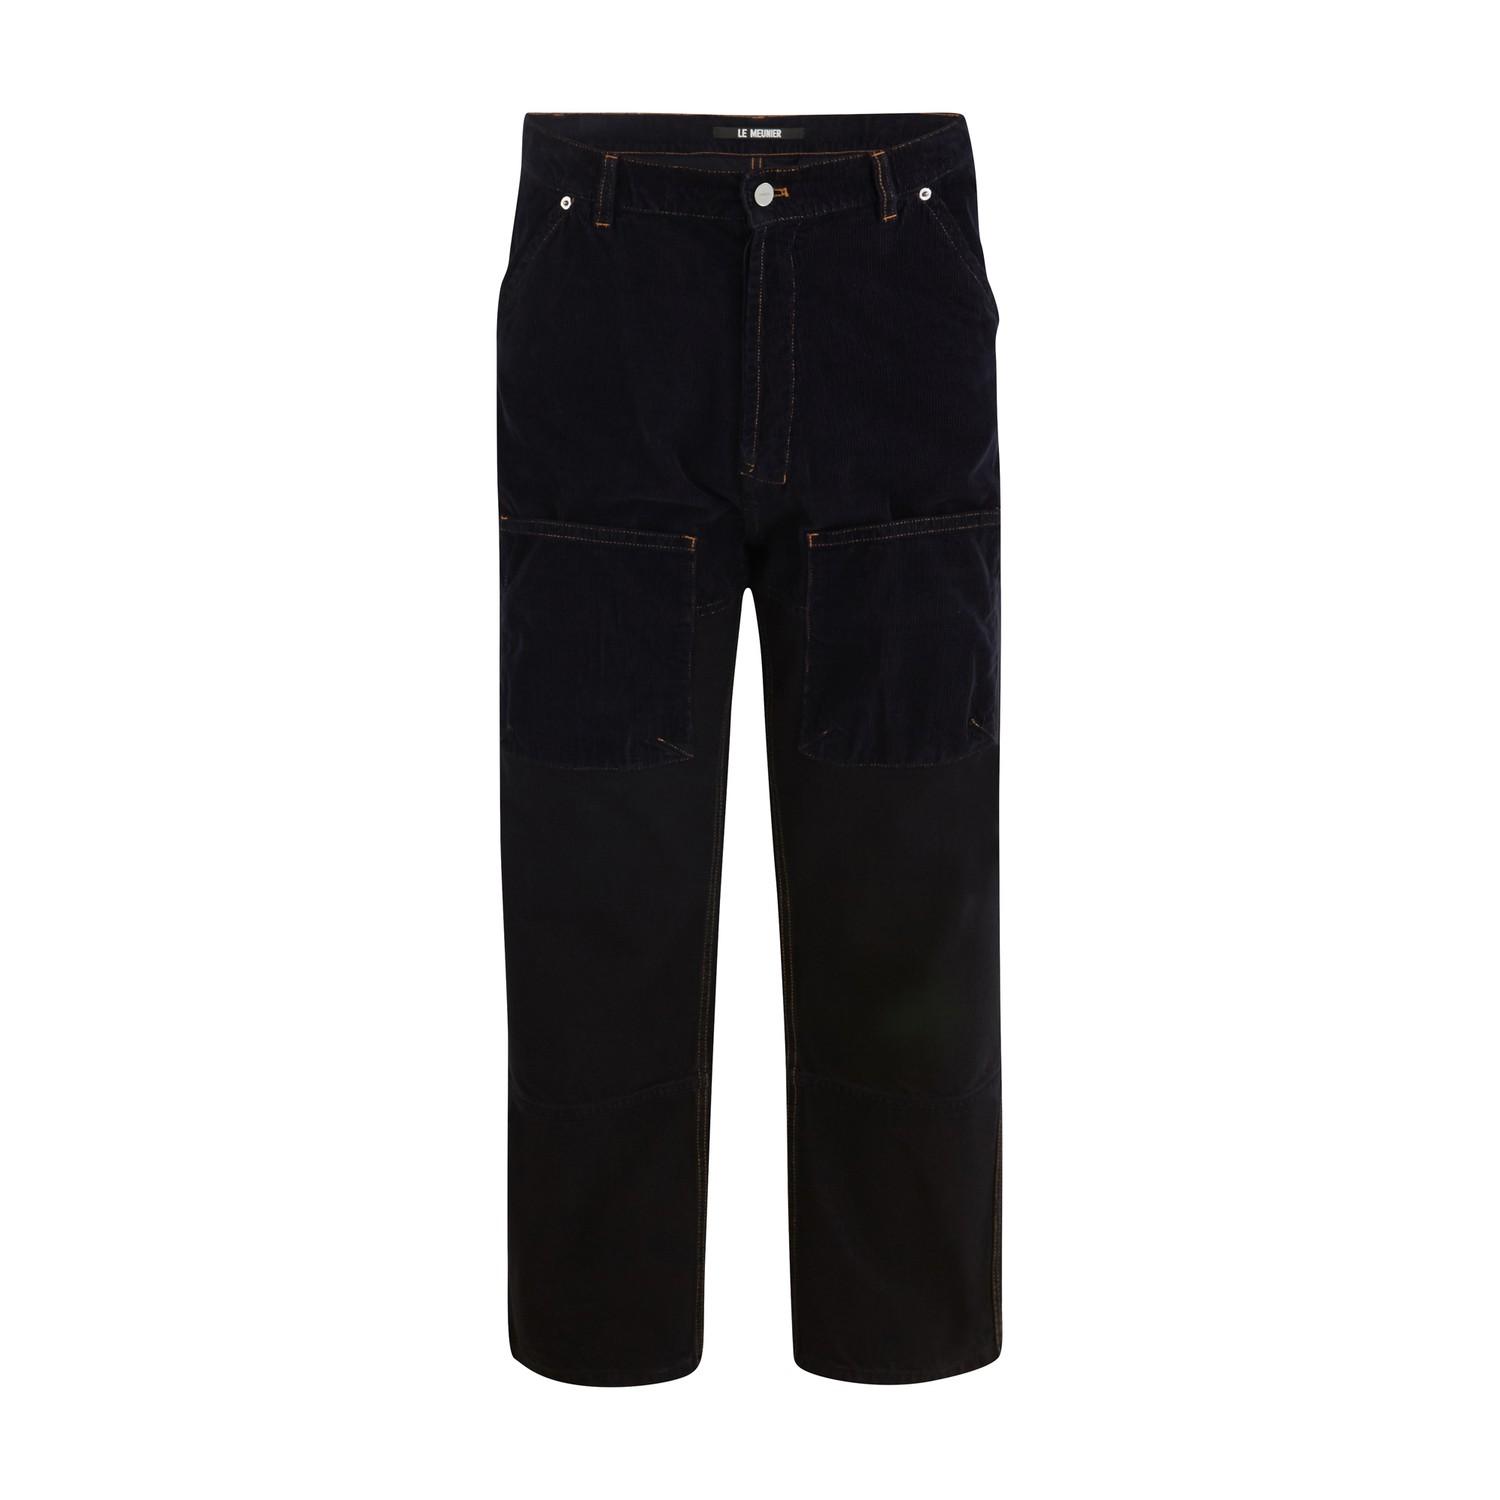 Jacquemus Cotton Jeans in Dark Navy (Blue) for Men - Lyst